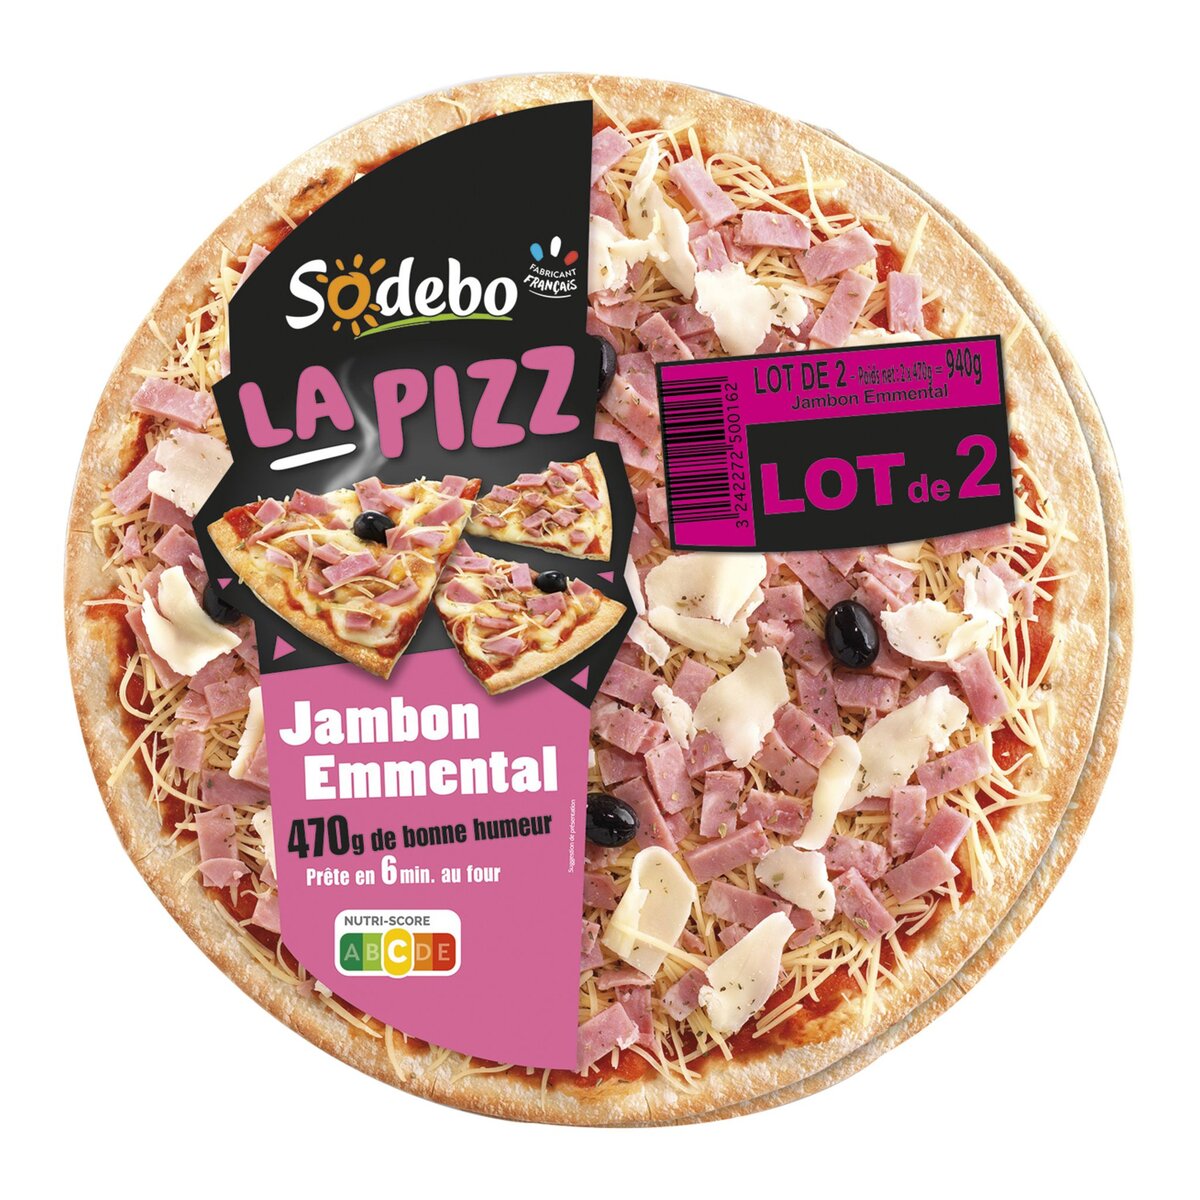 SODEBO Sodebo la pizza jambon emmental x2 -940g